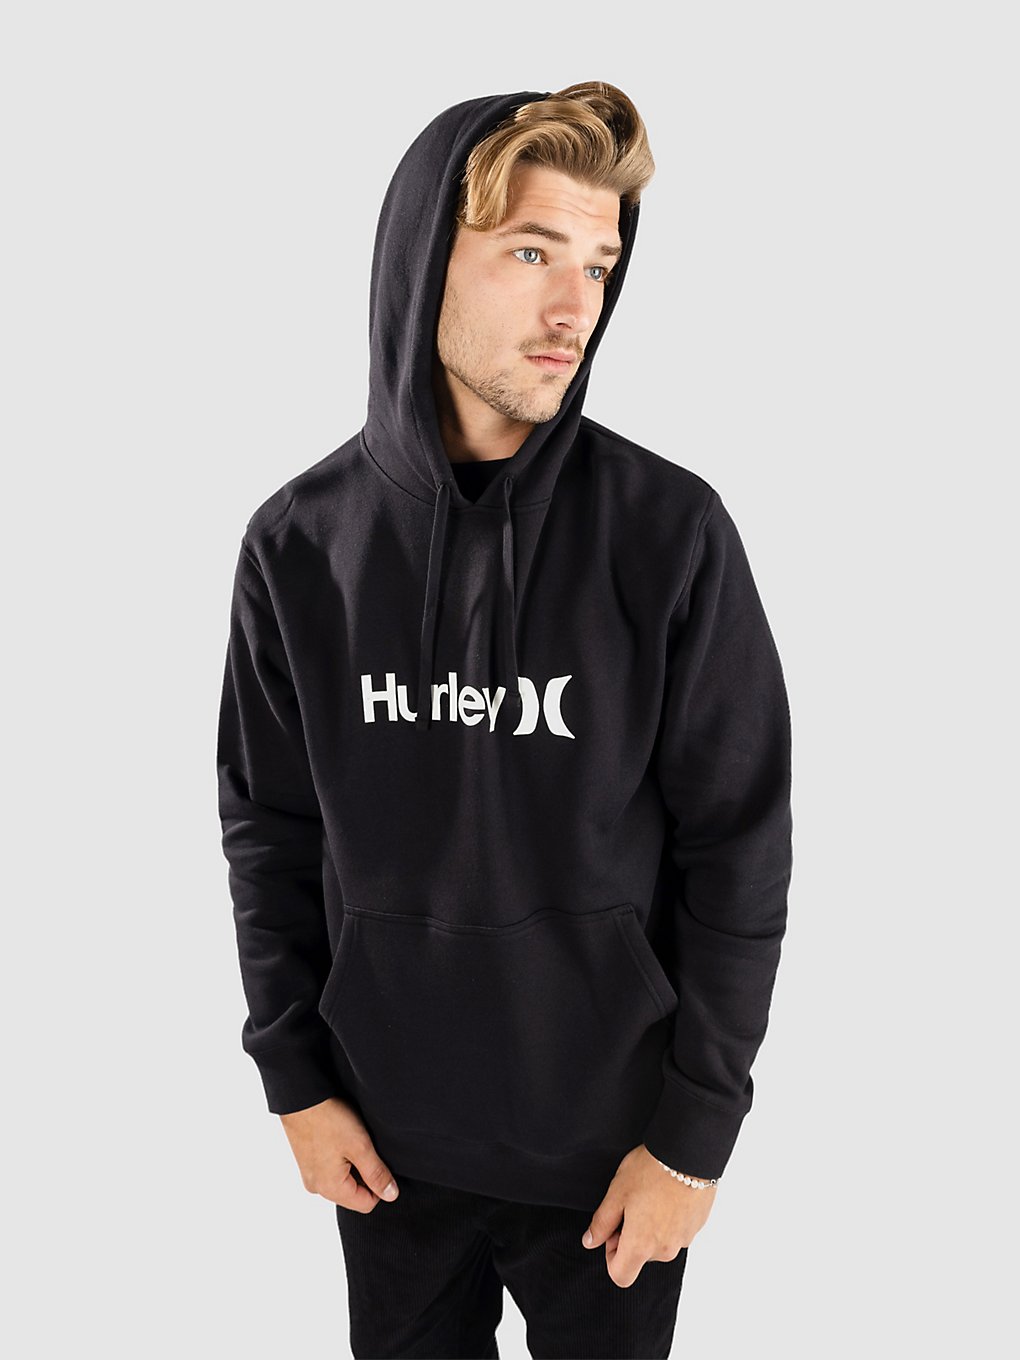 Hurley One & Only Fleece Hoodie black kaufen